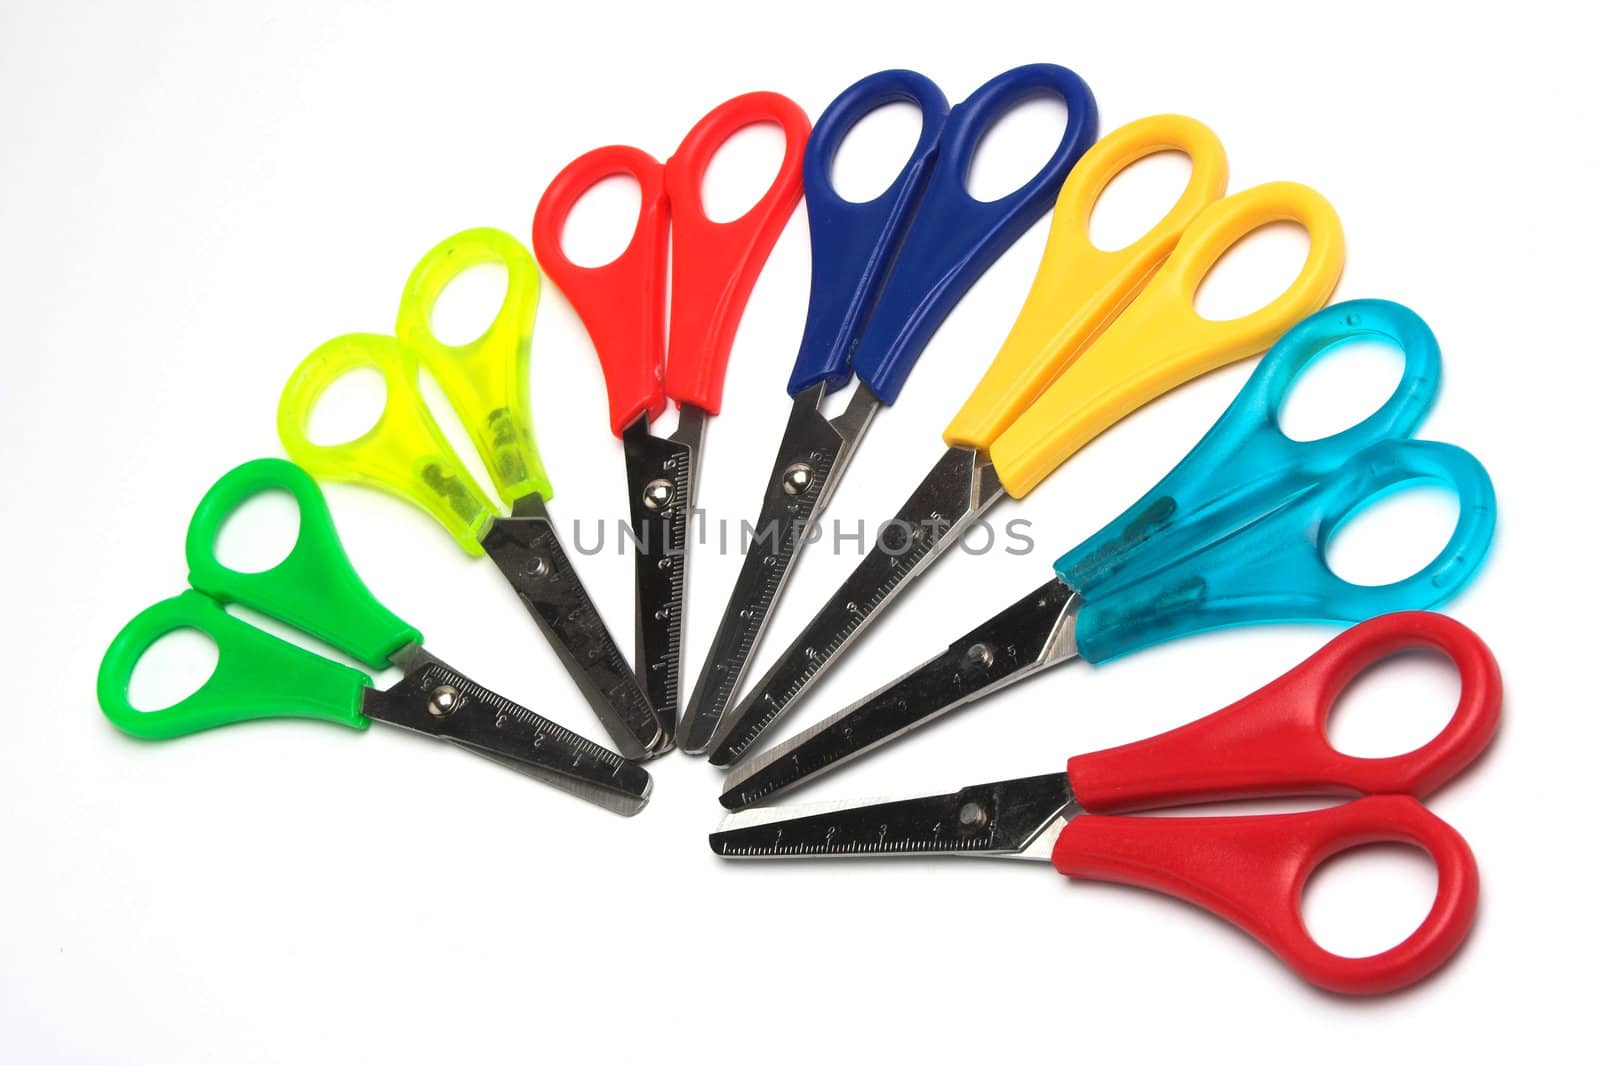 colored scissors by alexkosev